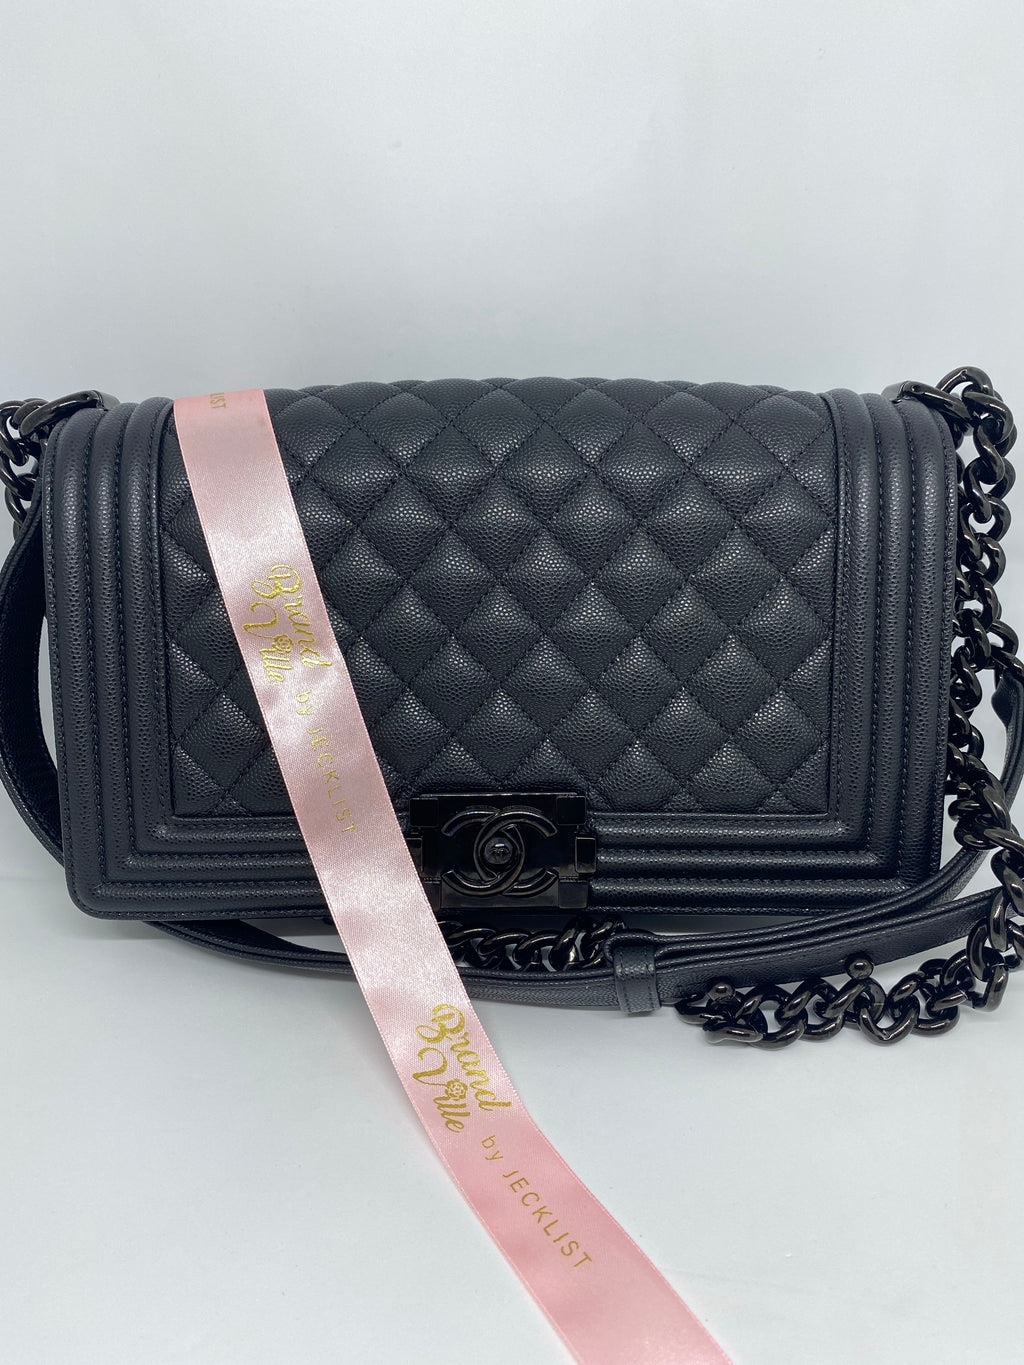 Chanel Le Boy High Quality Fake Bag Comparison ( REAL VS FAKE ) Bag Talks  by Anna 